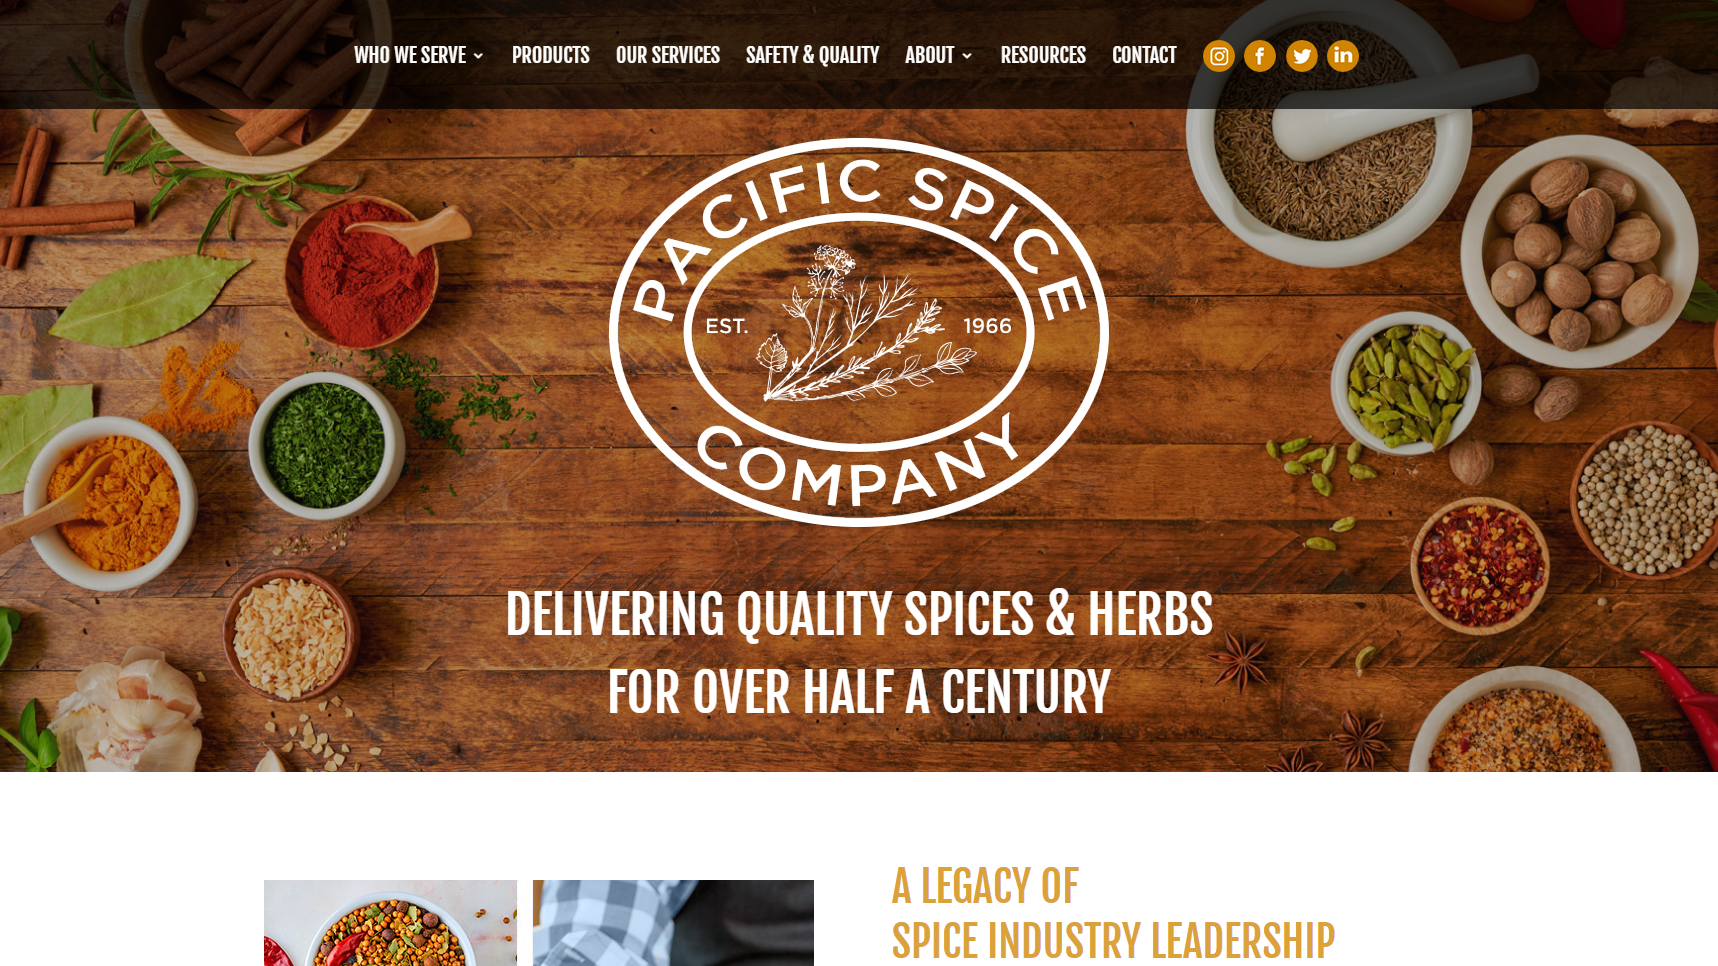 Pacific Spice Company - Spice Manufacturer